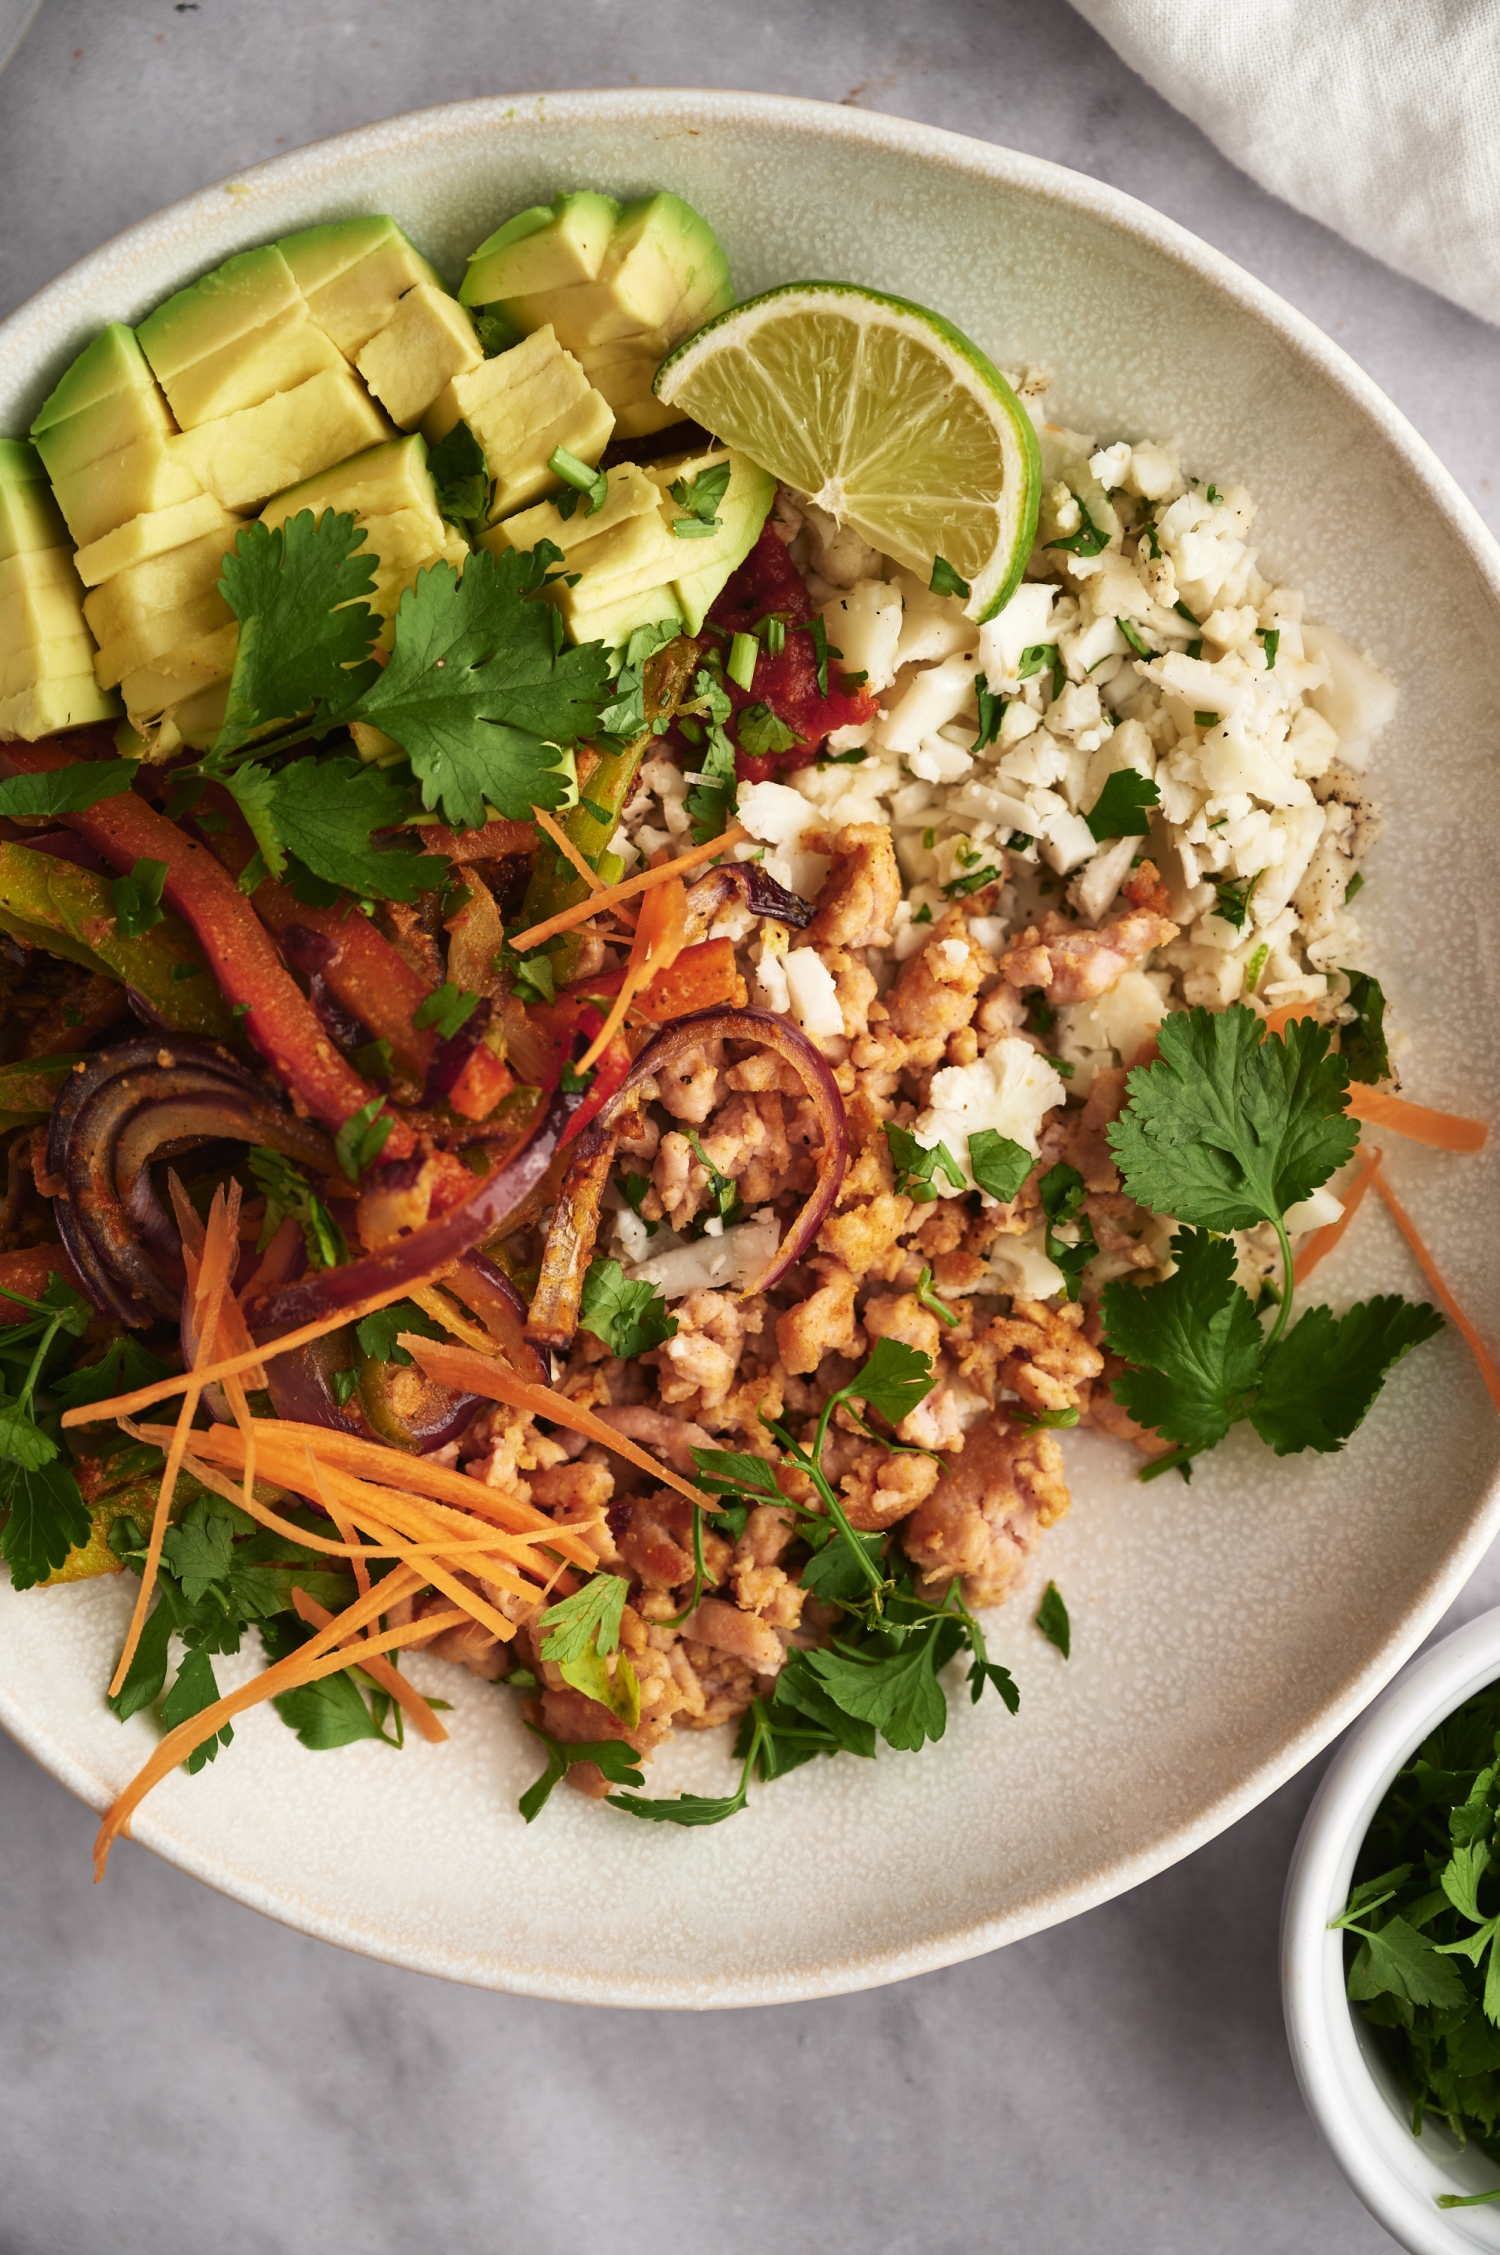 Low carb taco bowls with cilantro lime cauliflower rice, ground turkey, and avocado.